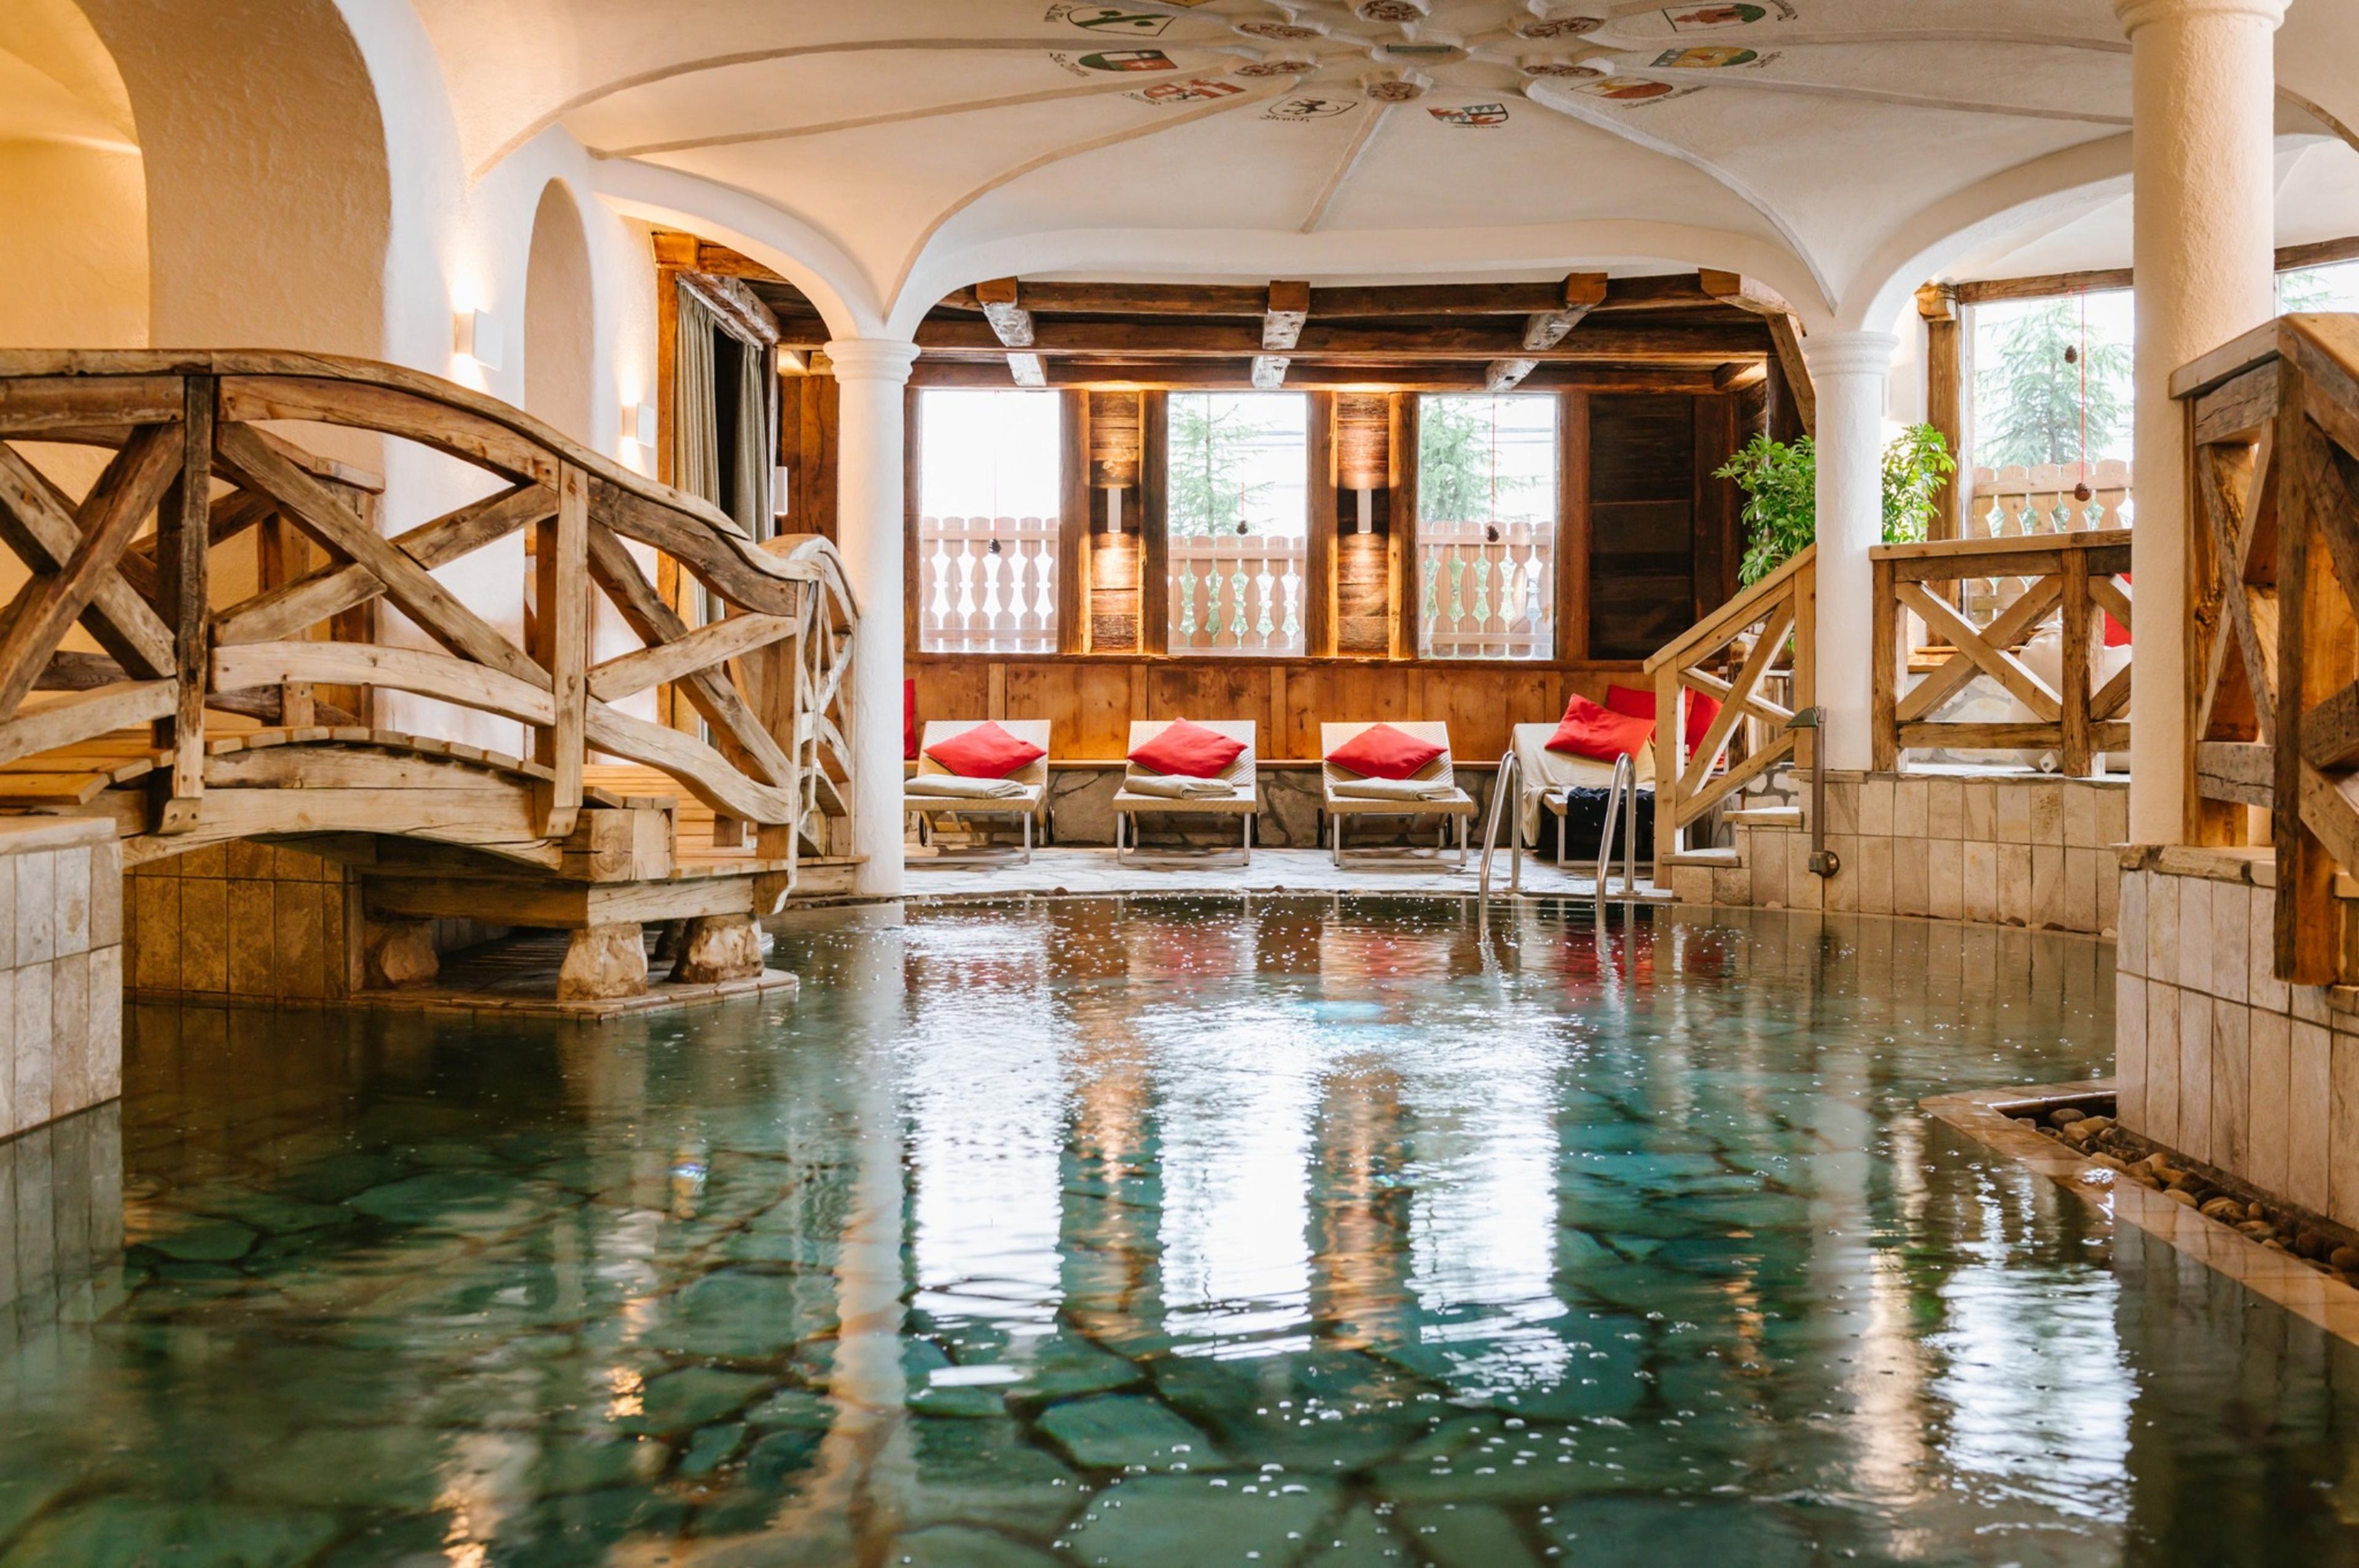 Hotel La Perla - Corvara in Badia, Italy